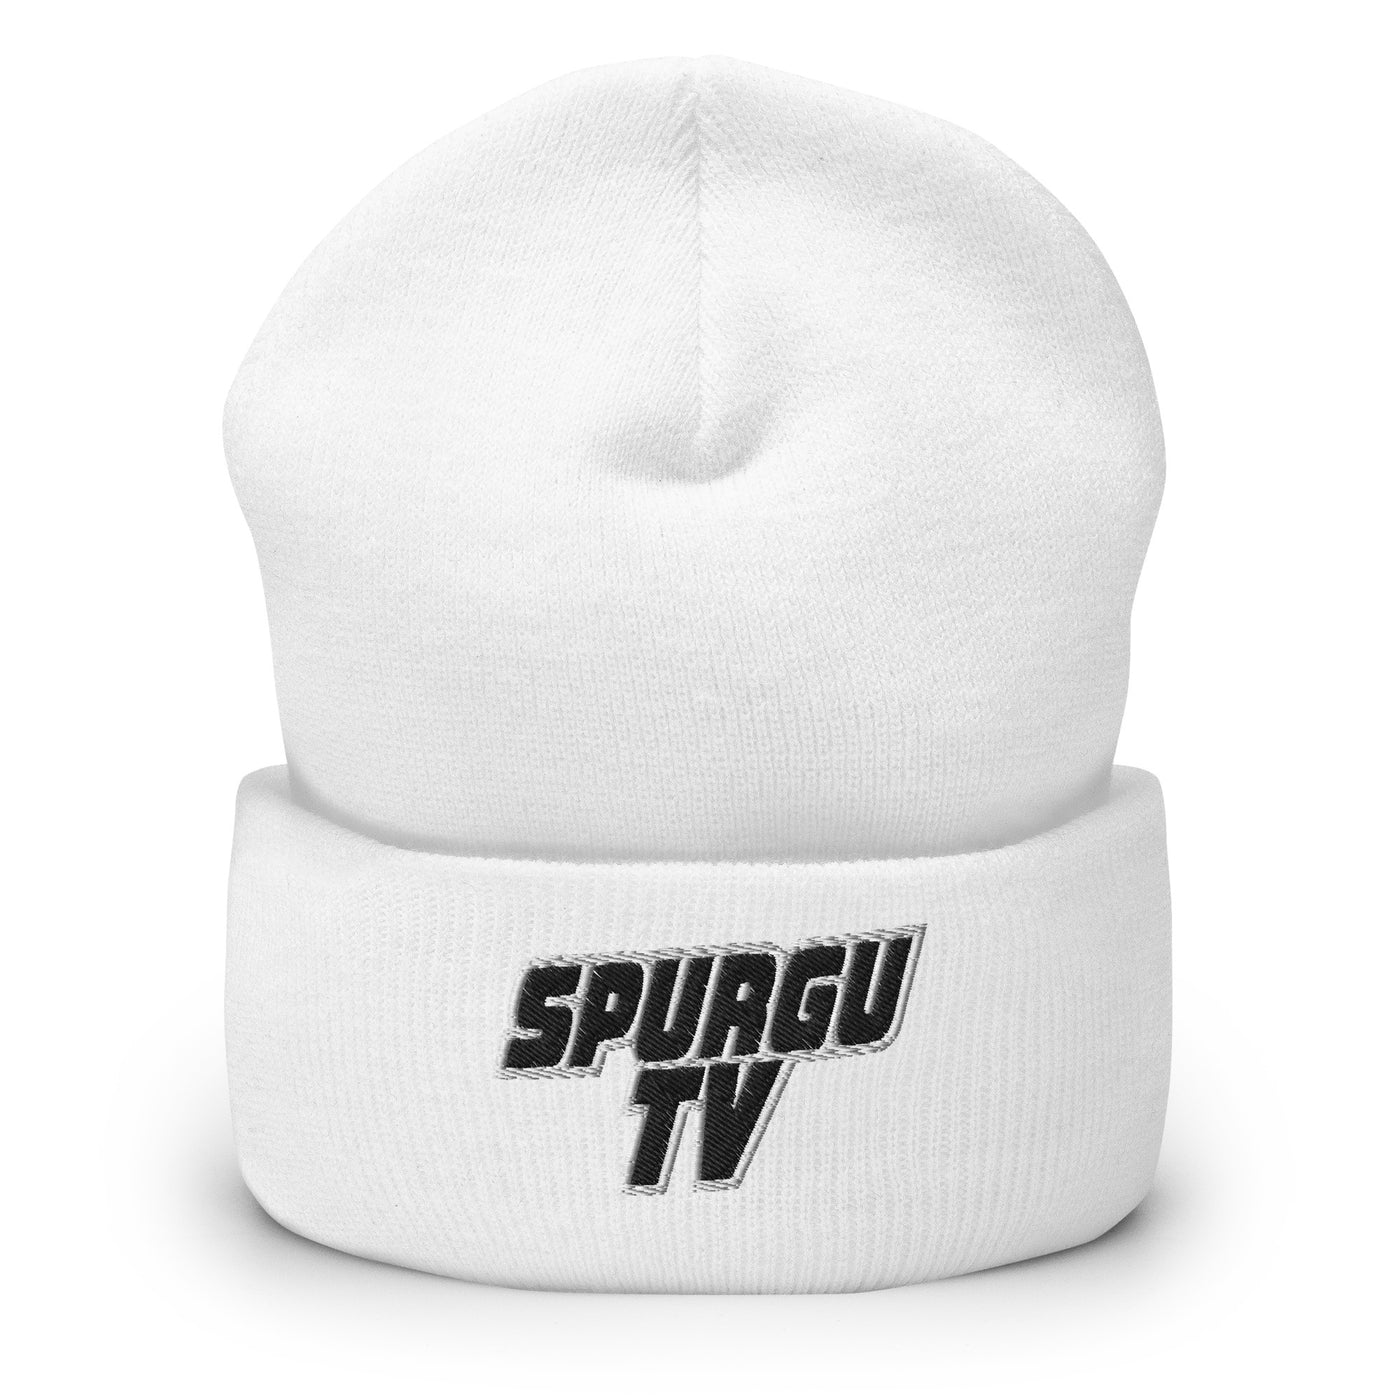 Spurgu-TV | Pipo logolla